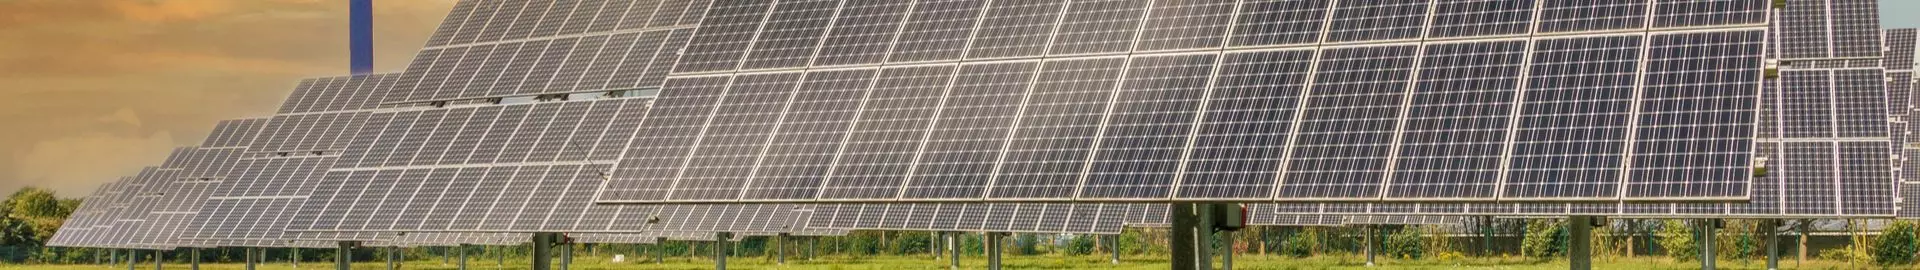 Emerging Technologies in Solar Power Market